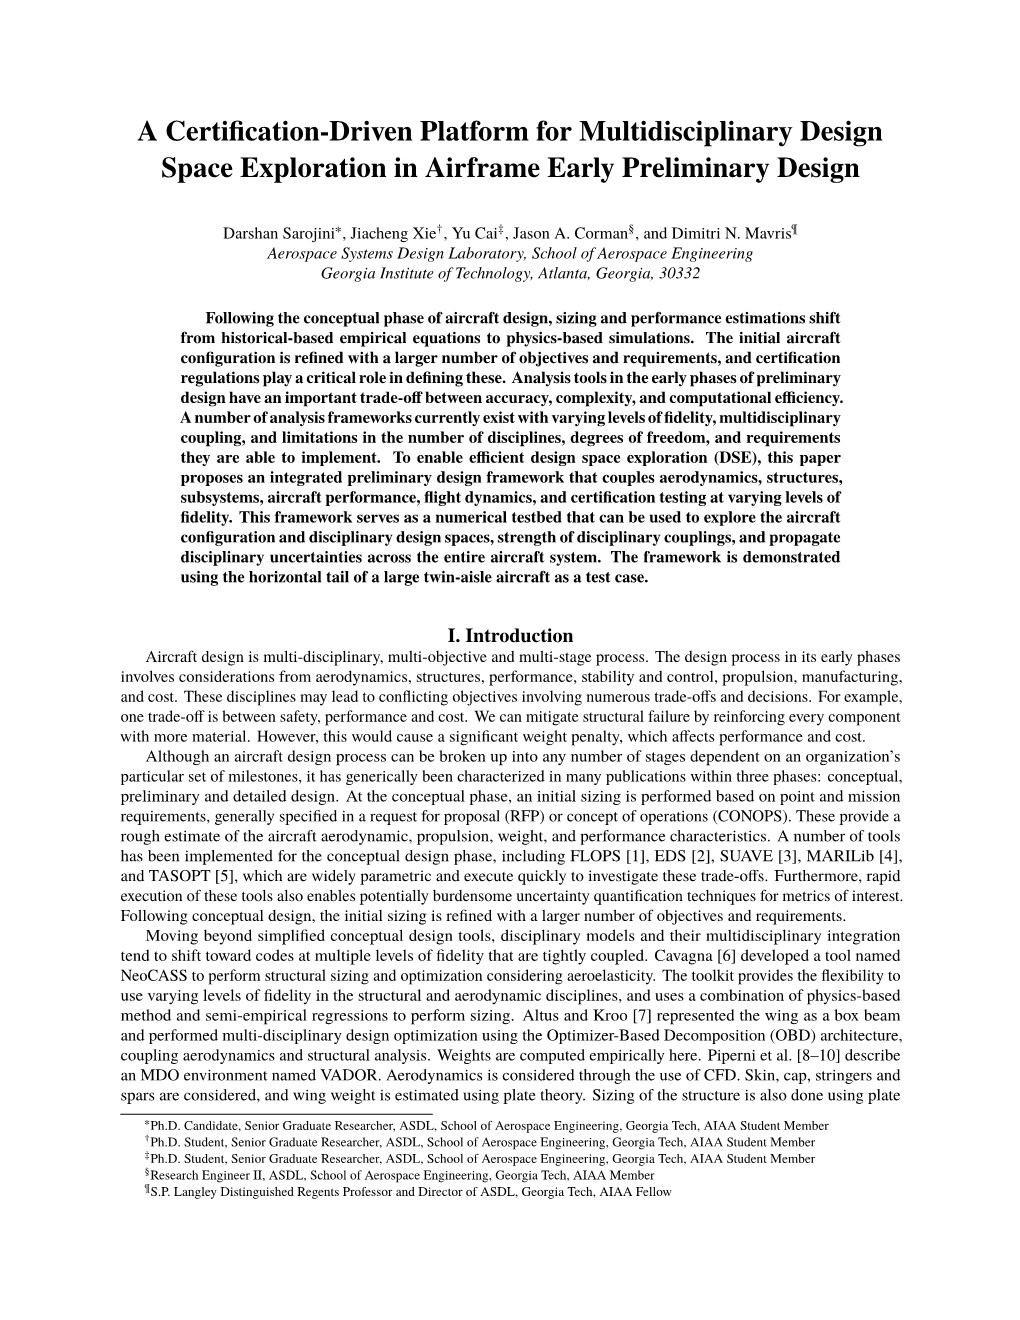 A Certification-Driven Platform for Multidisciplinary Design Space